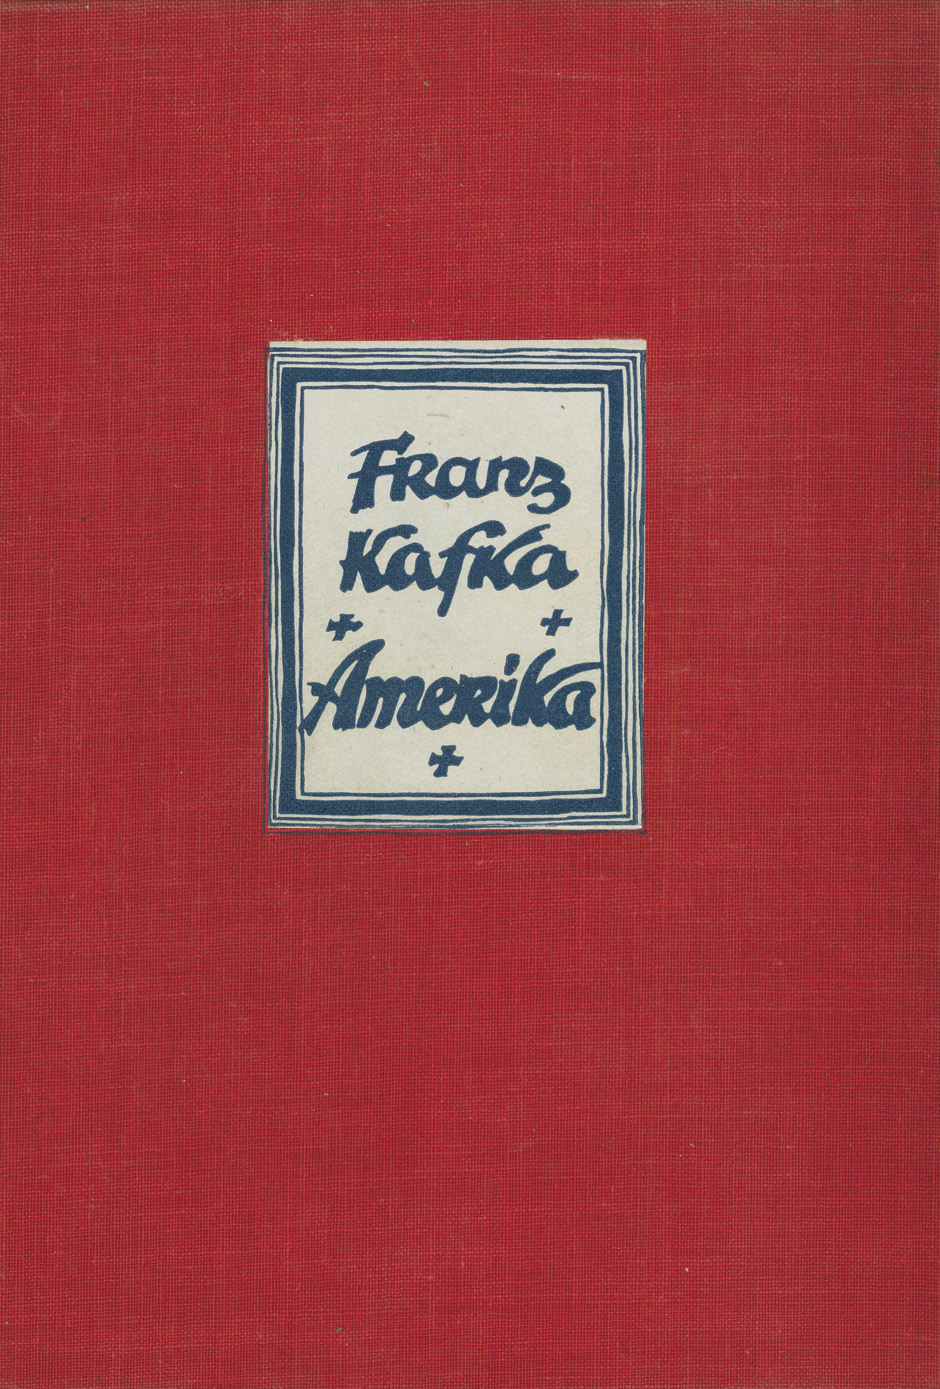 Lot 3237, Auction  115, Kafka, Franz, Amerika